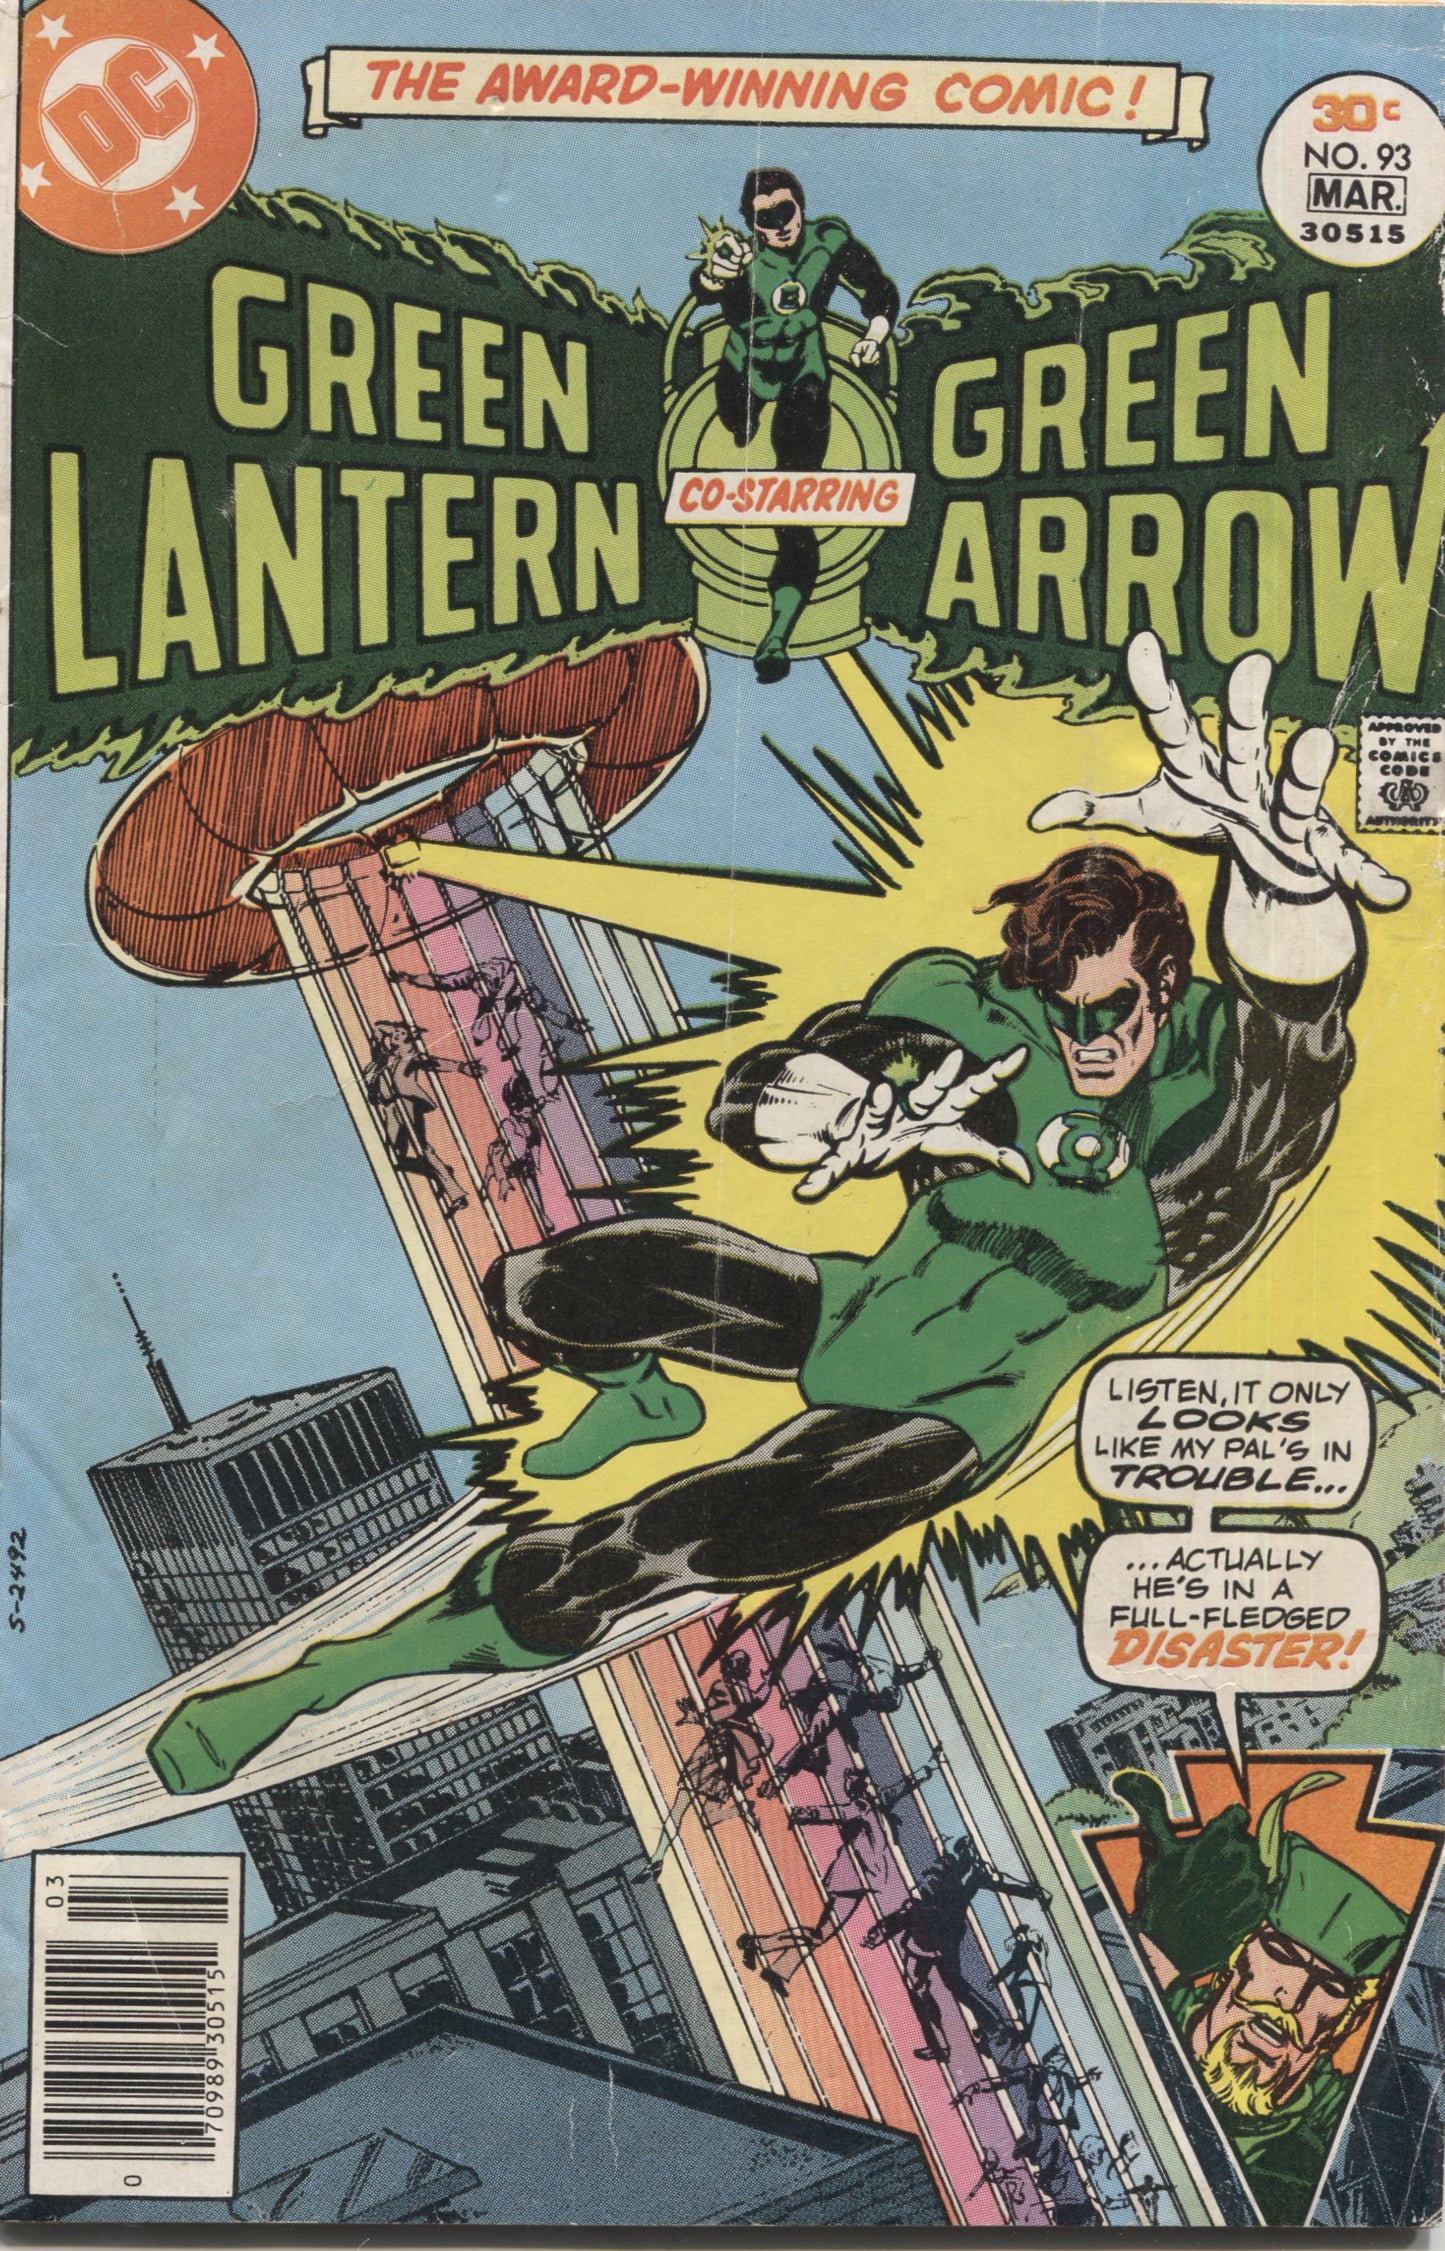 Green Lantern Vol. 16, No. 93, Co-Starring Green Arrow, DC Comics, February-March 1977